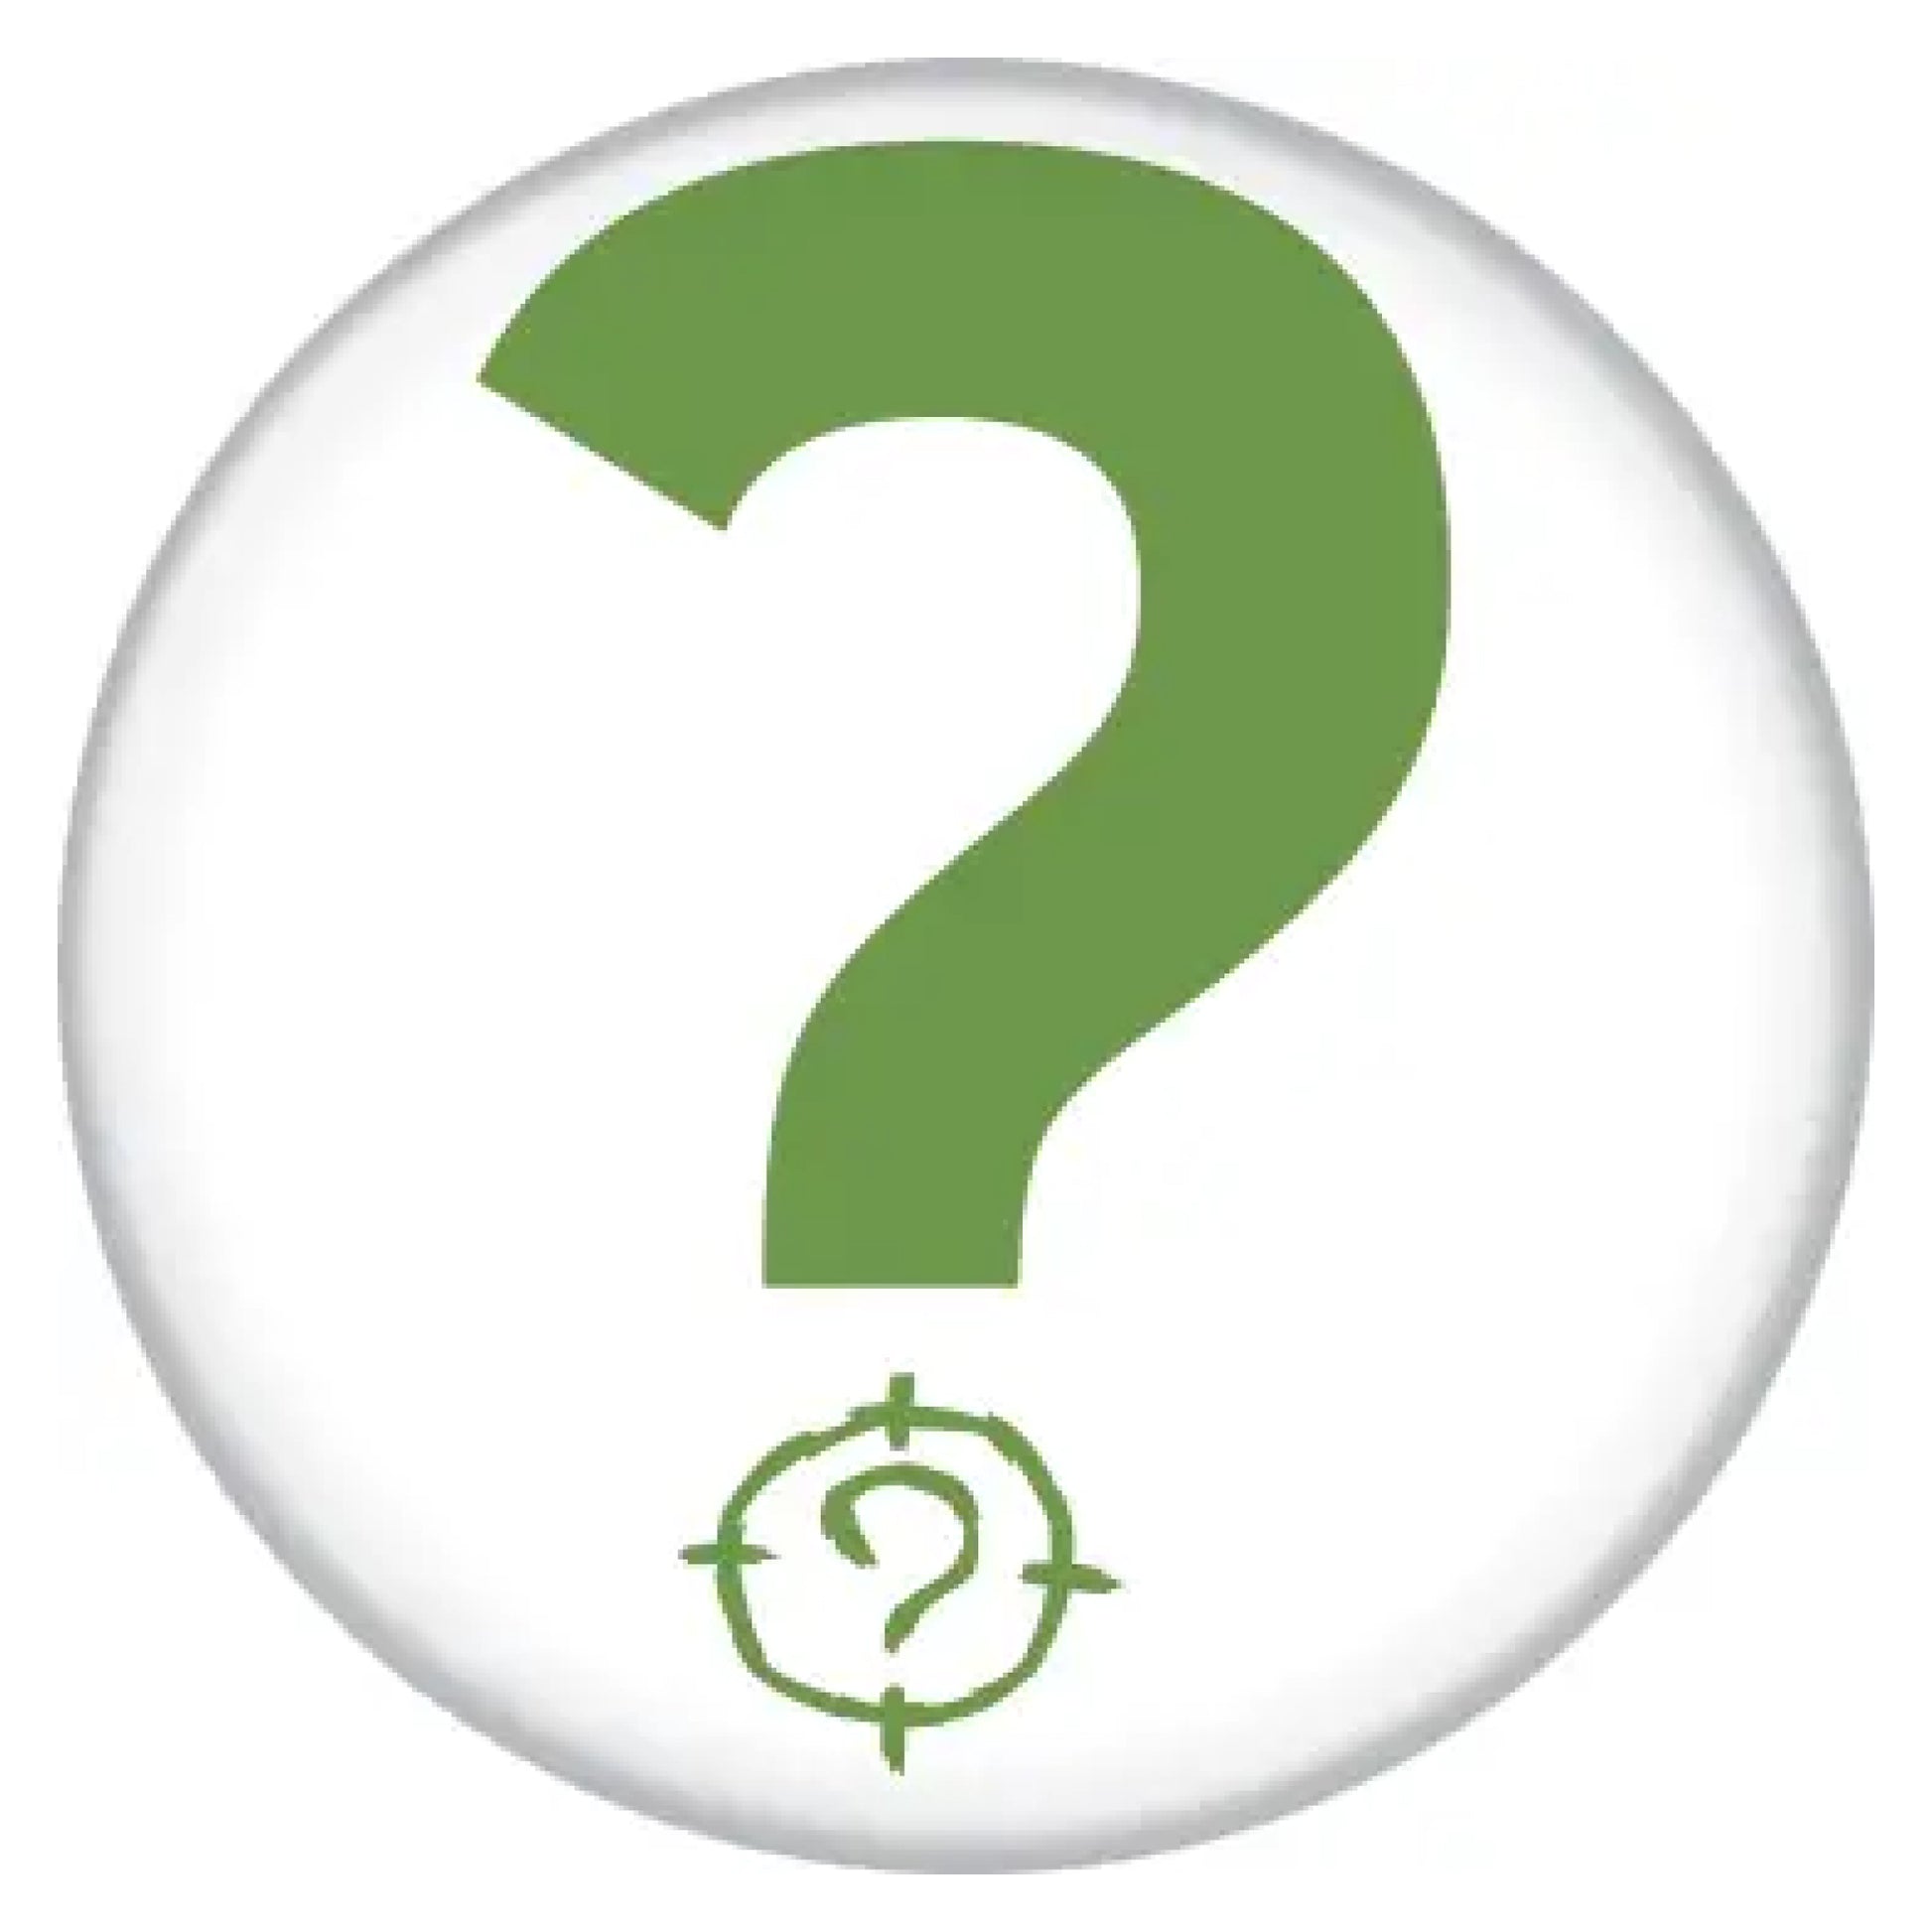 the riddler question mark logo